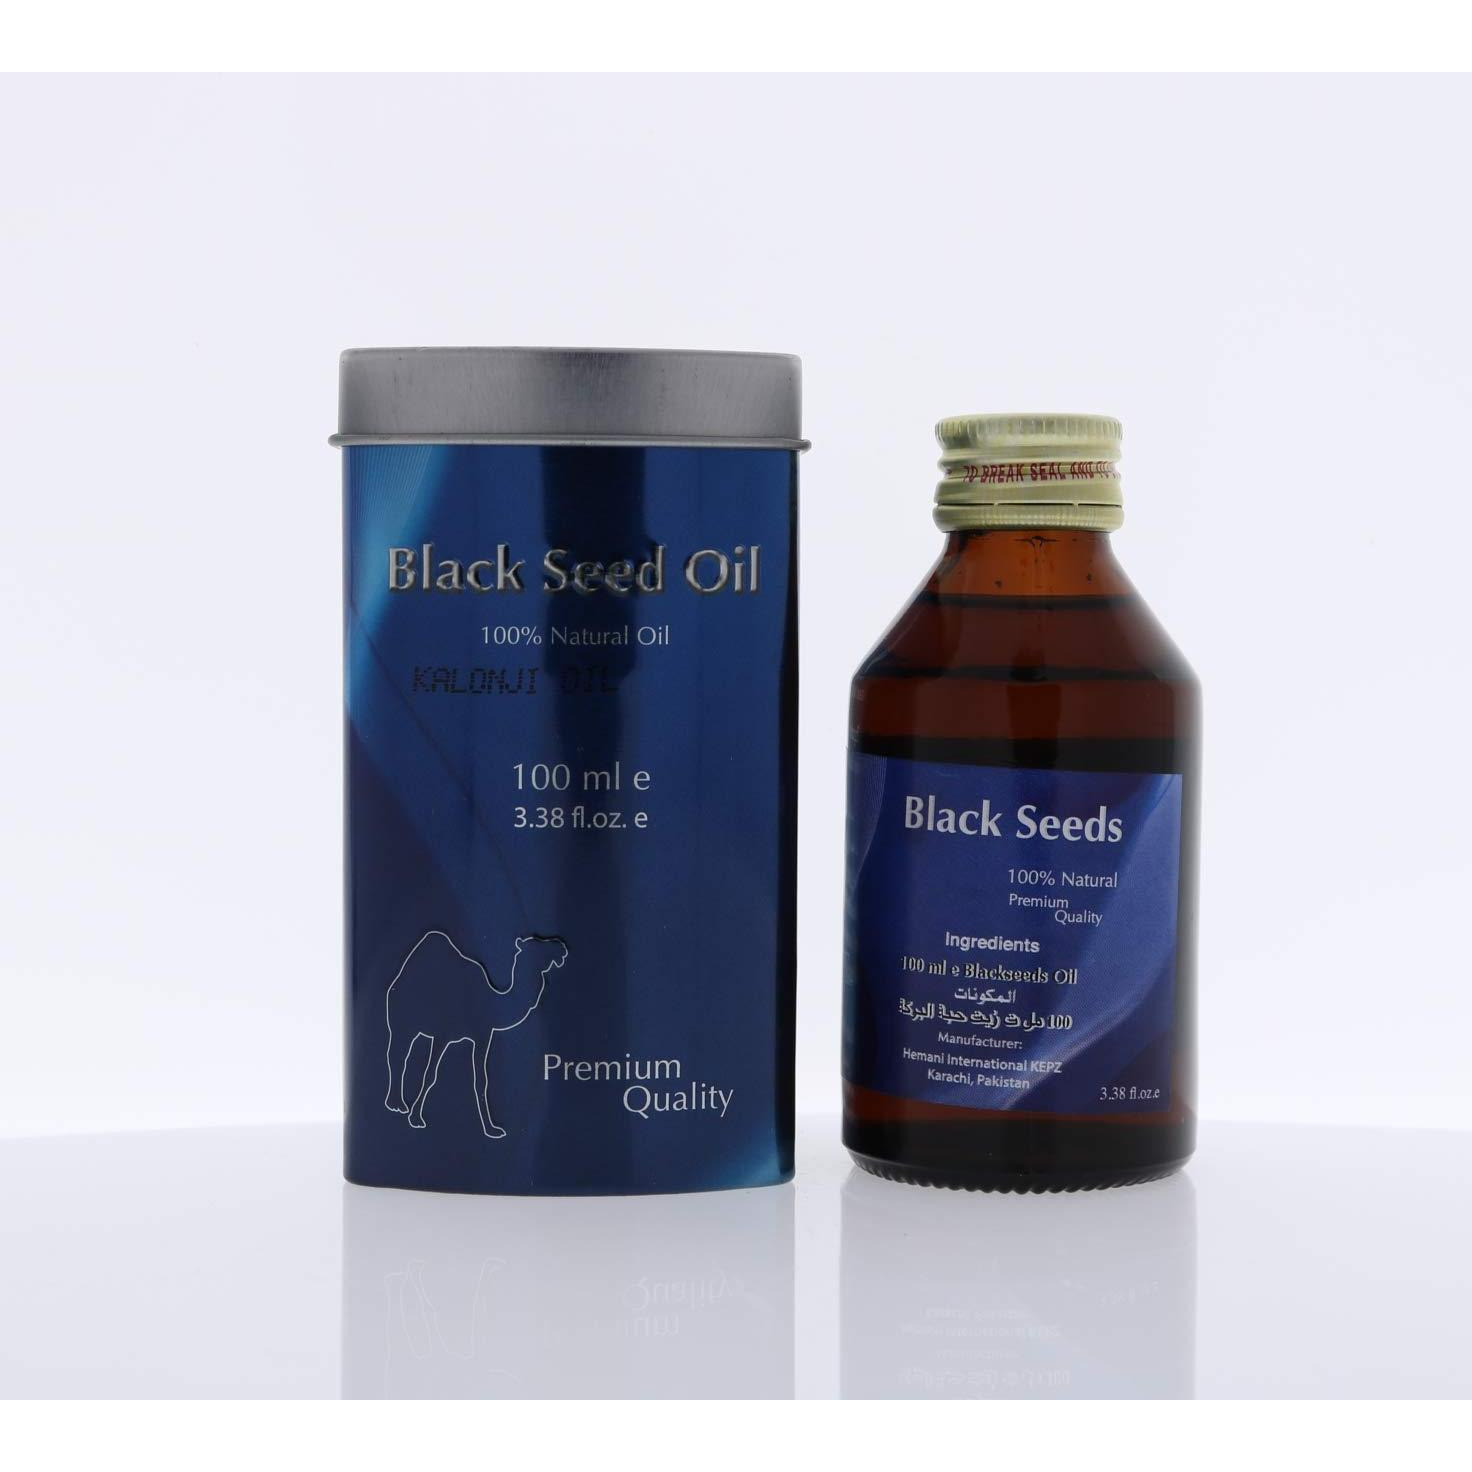 HEMANI Black Seed Oil Premium 100 ML - 3.4 FL OZ - First Cold Pressed - Alcohol Free - Solvent Free - IMMUNITY BOOSTER - Black Cumin Seed Oil from 100% HALAL Genuine Nigella Sativa